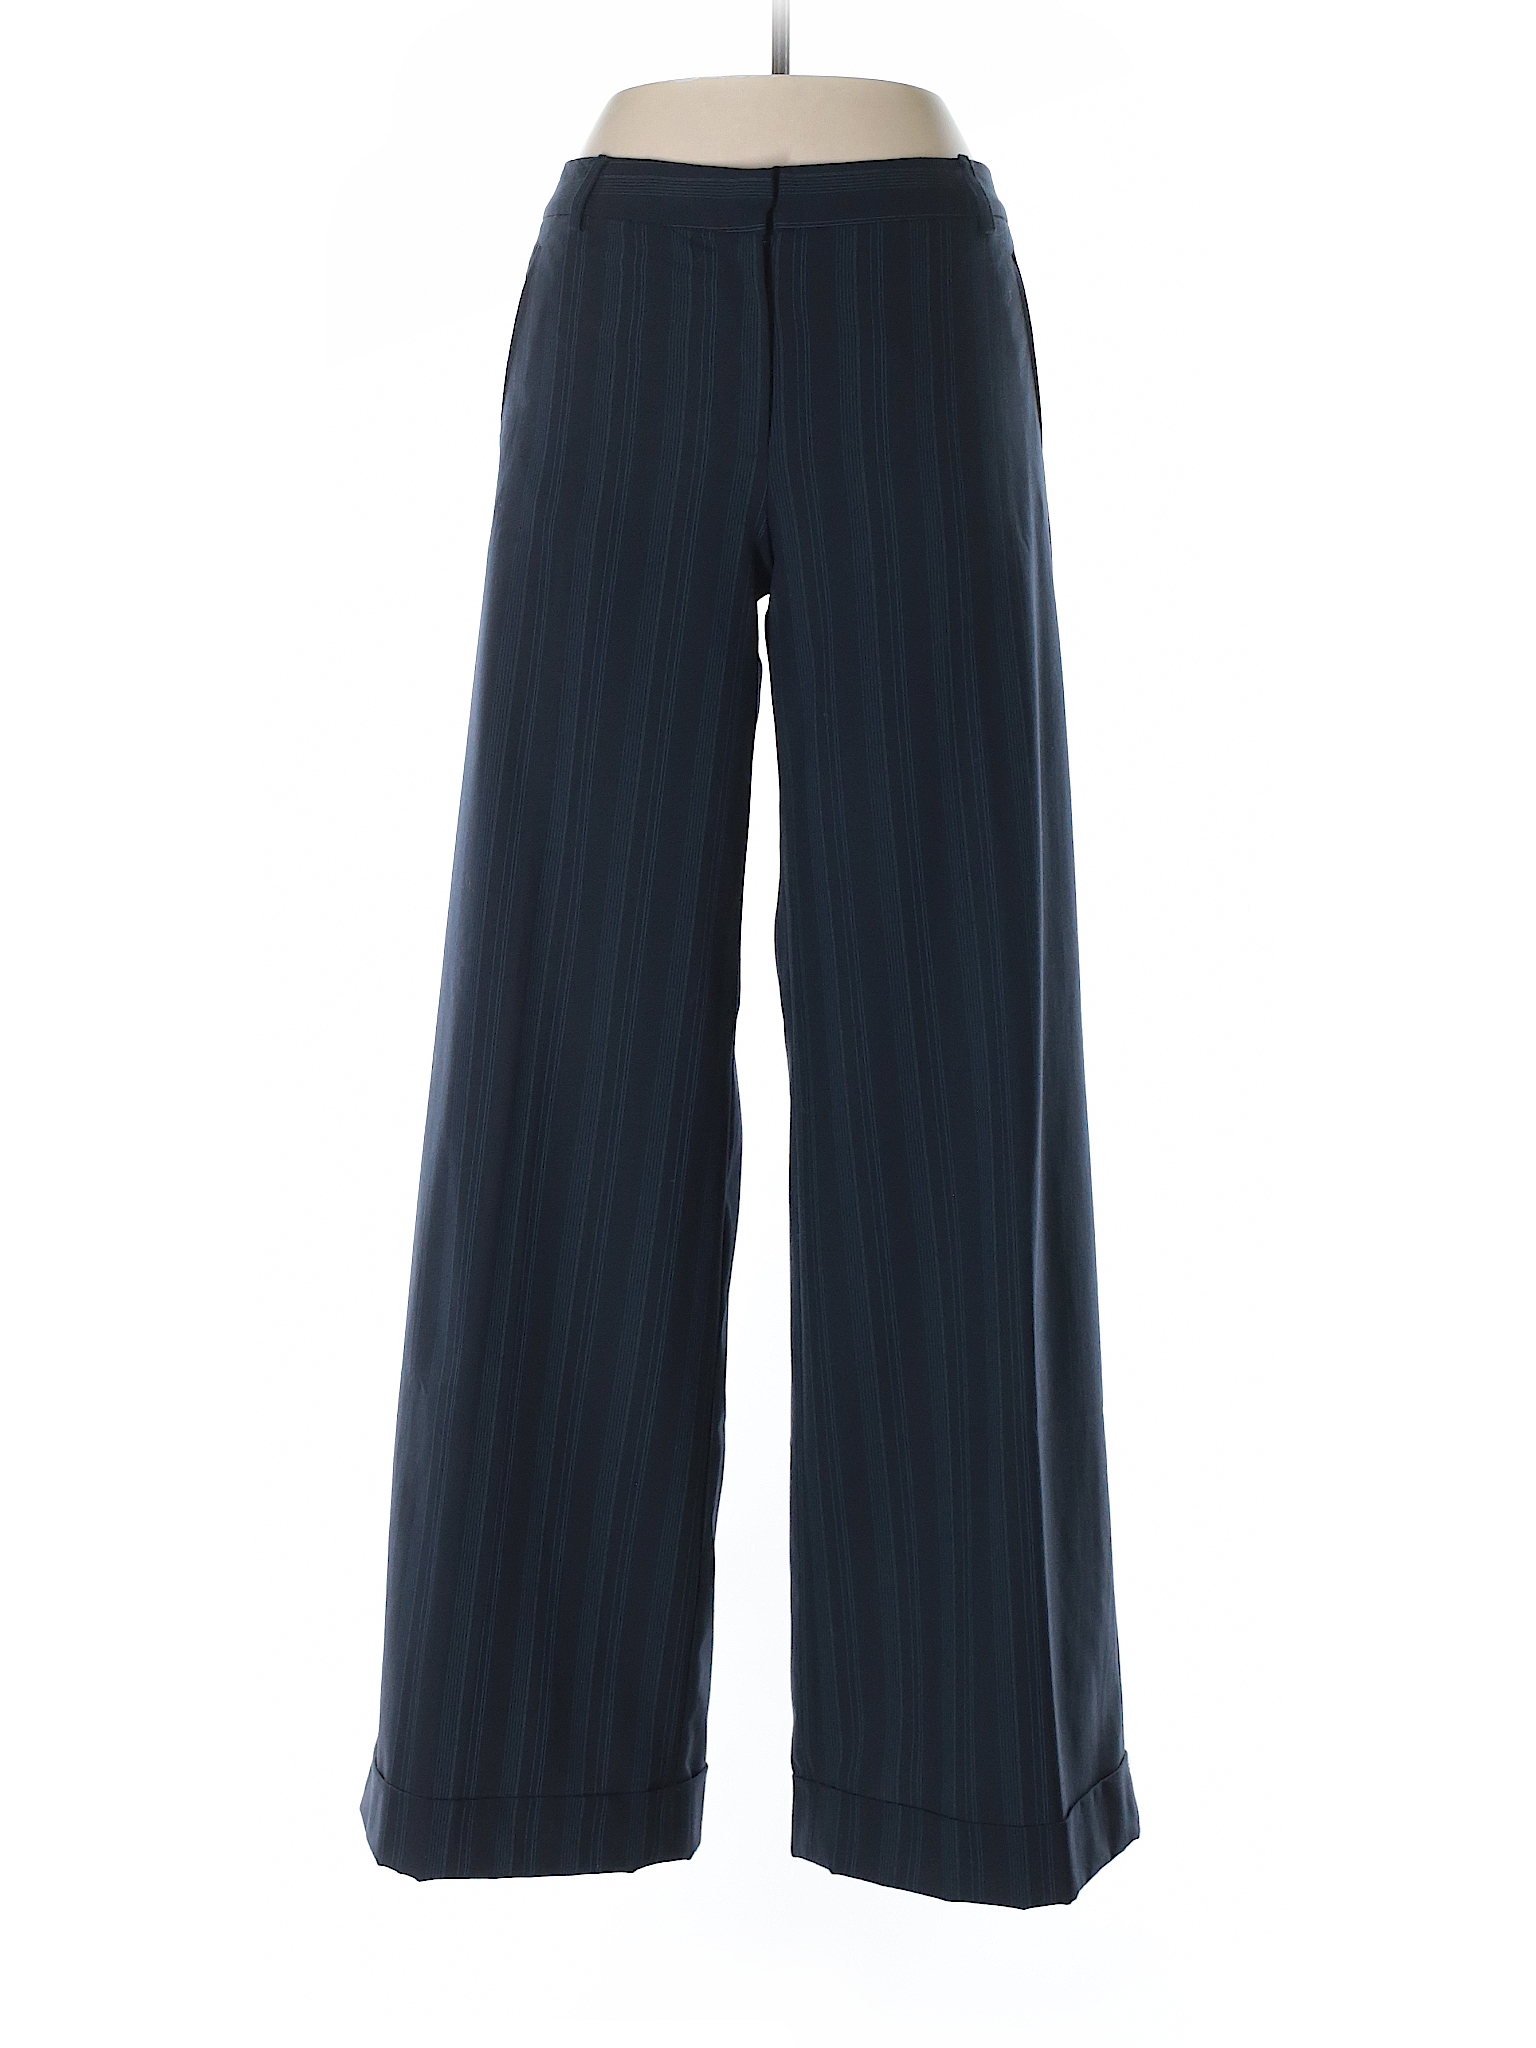 Isaac Mizrahi for Target Stripes Dark Blue Dress Pants Size 8 - 80% off ...